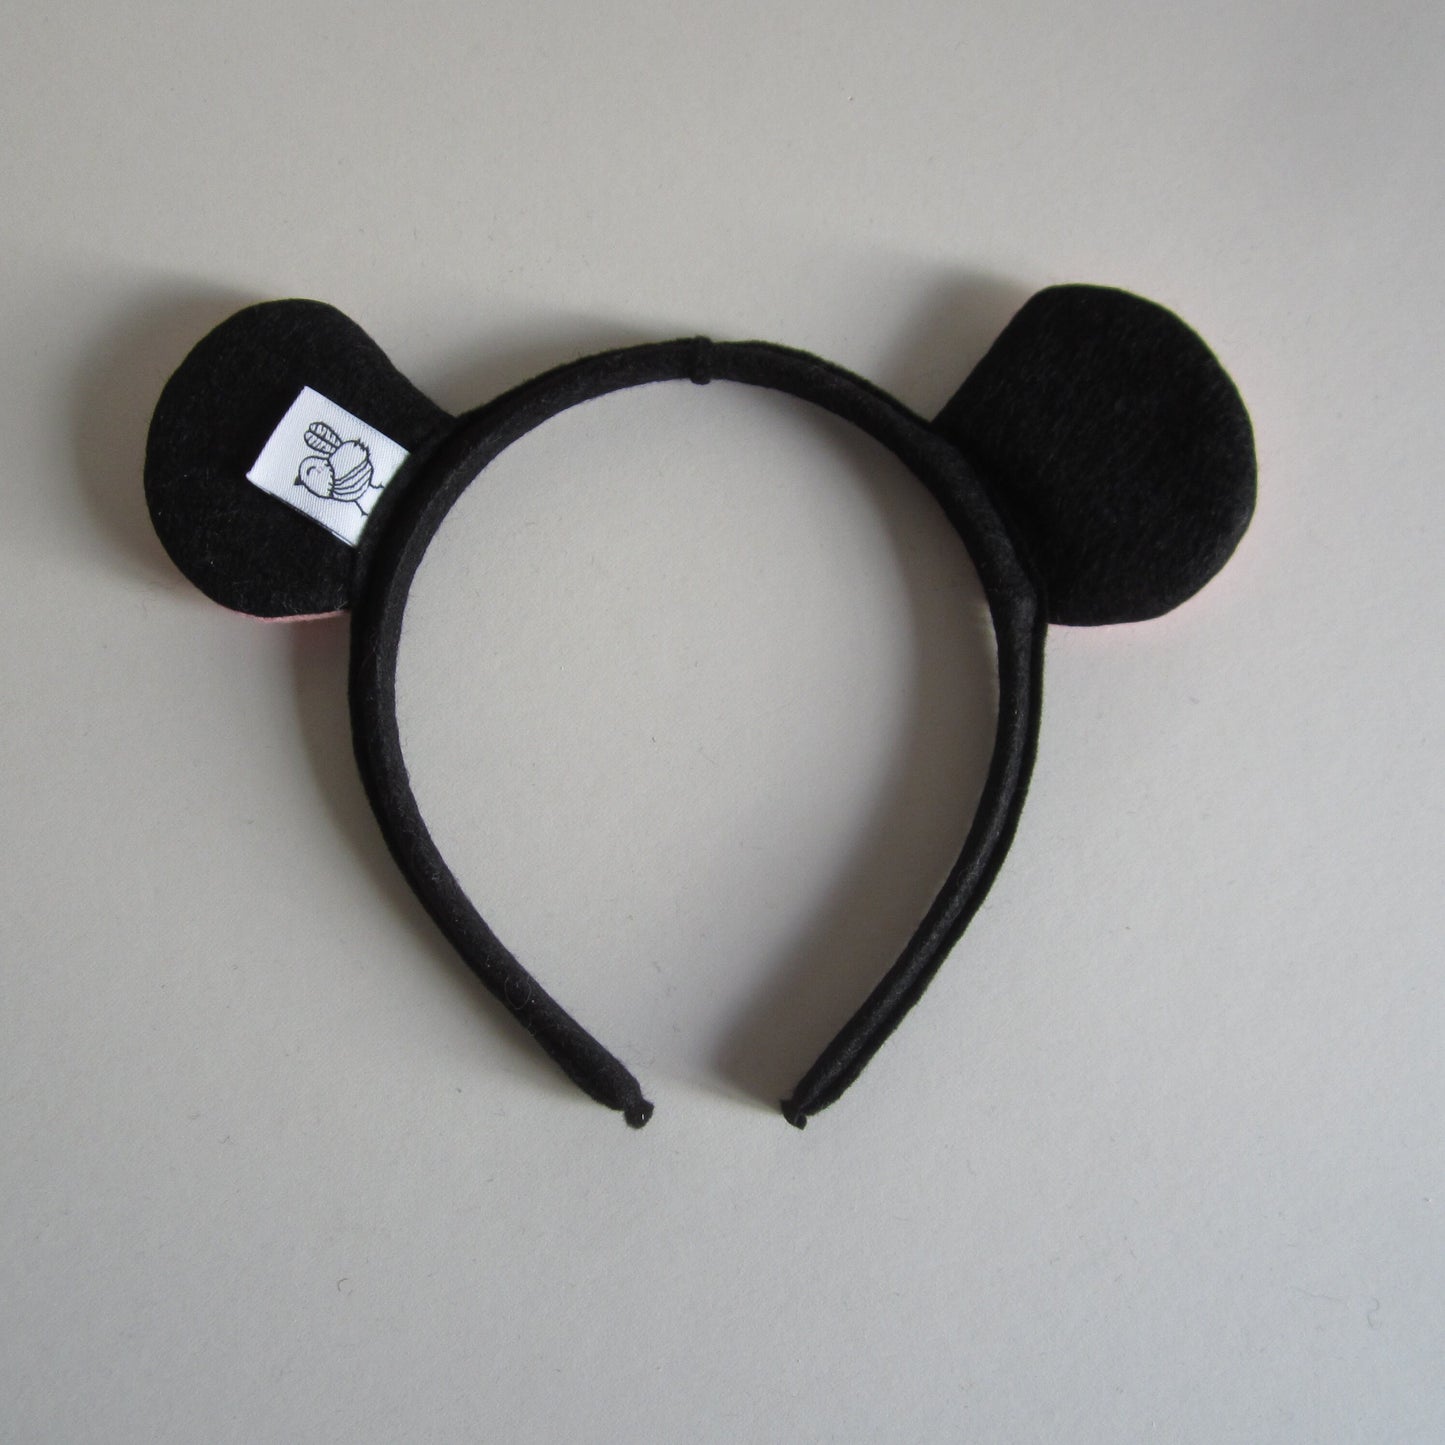 Mouse Ears Hairband Made of Black Felt